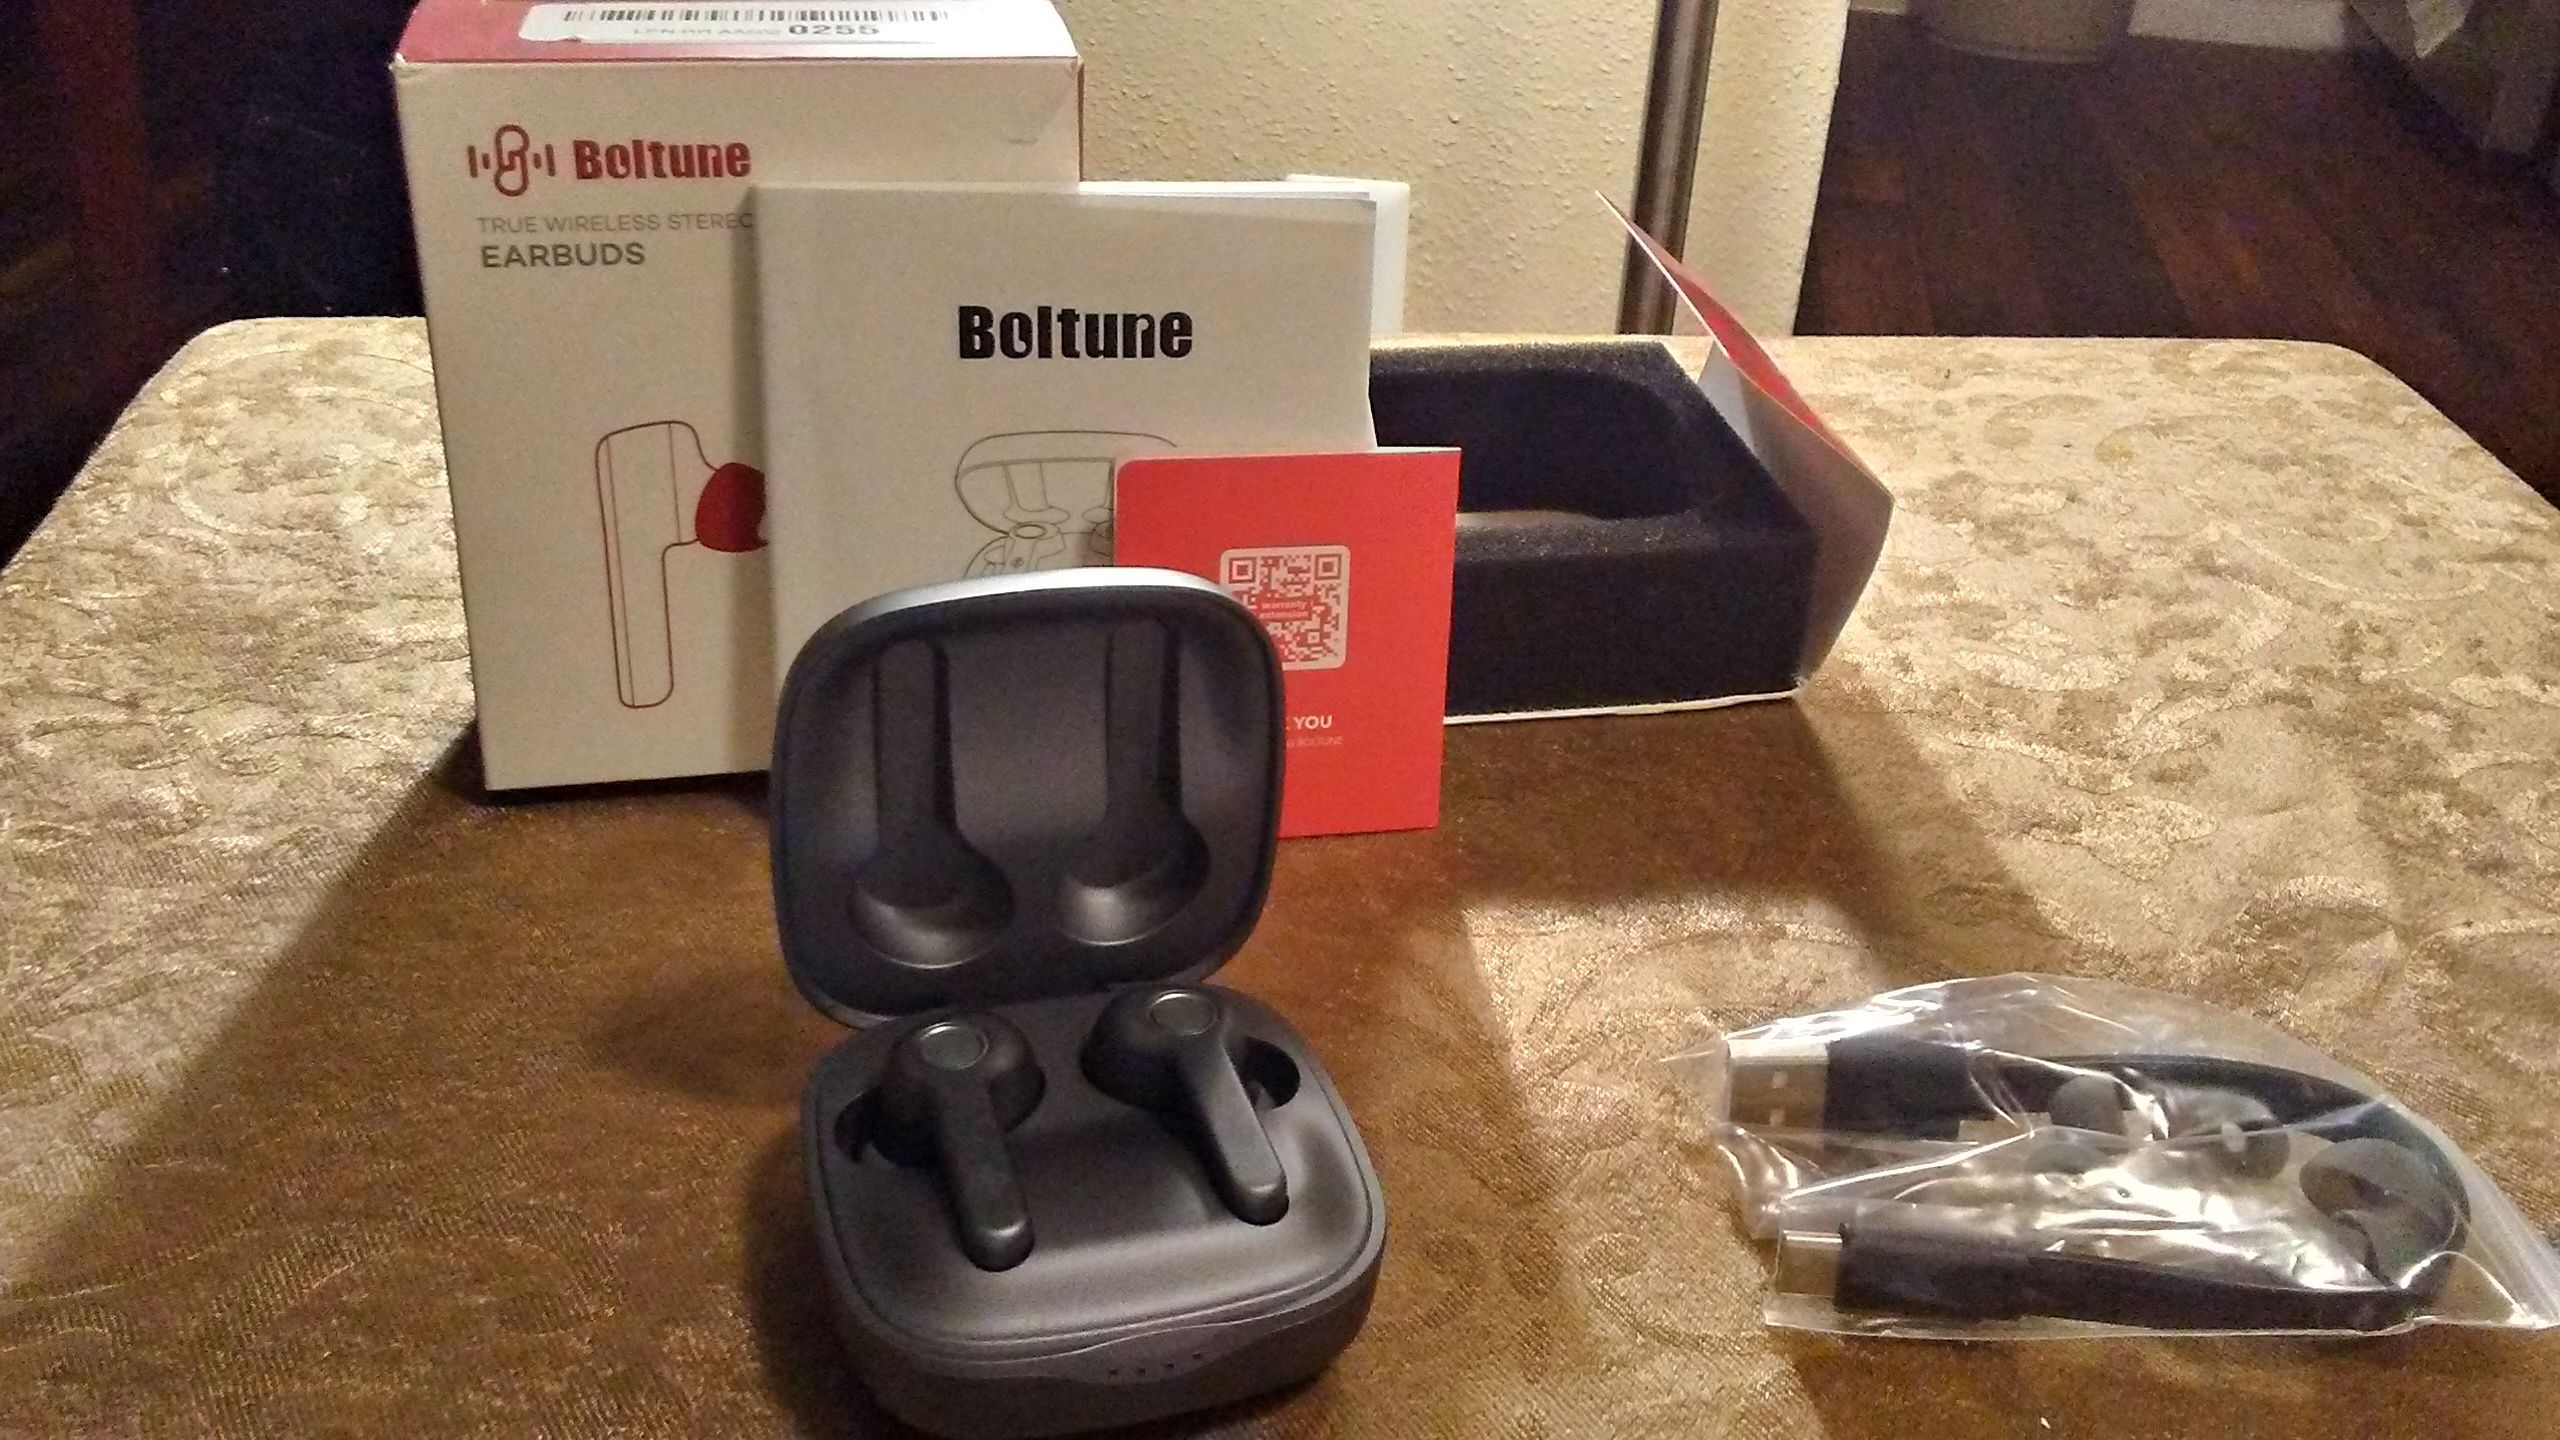 Boltune True Wireless earbuds Bluetooth V5.0 Headphones .